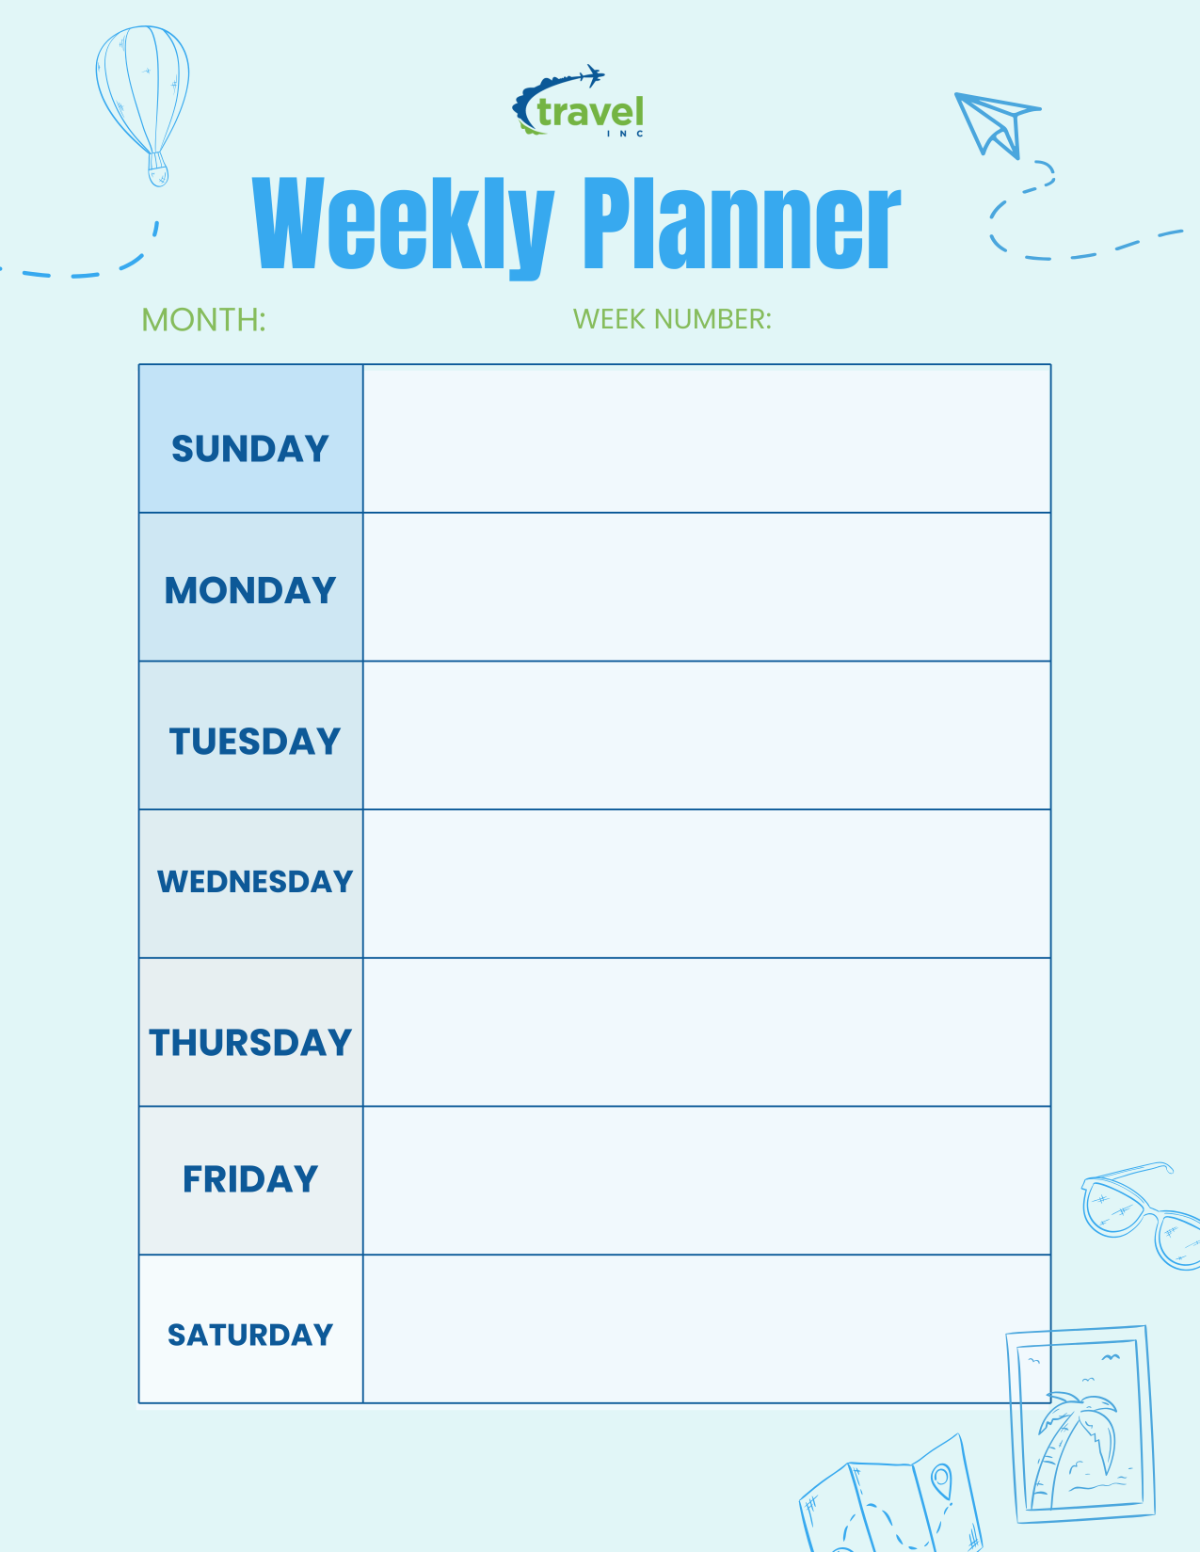 Travel Agency Weekly Planner Template